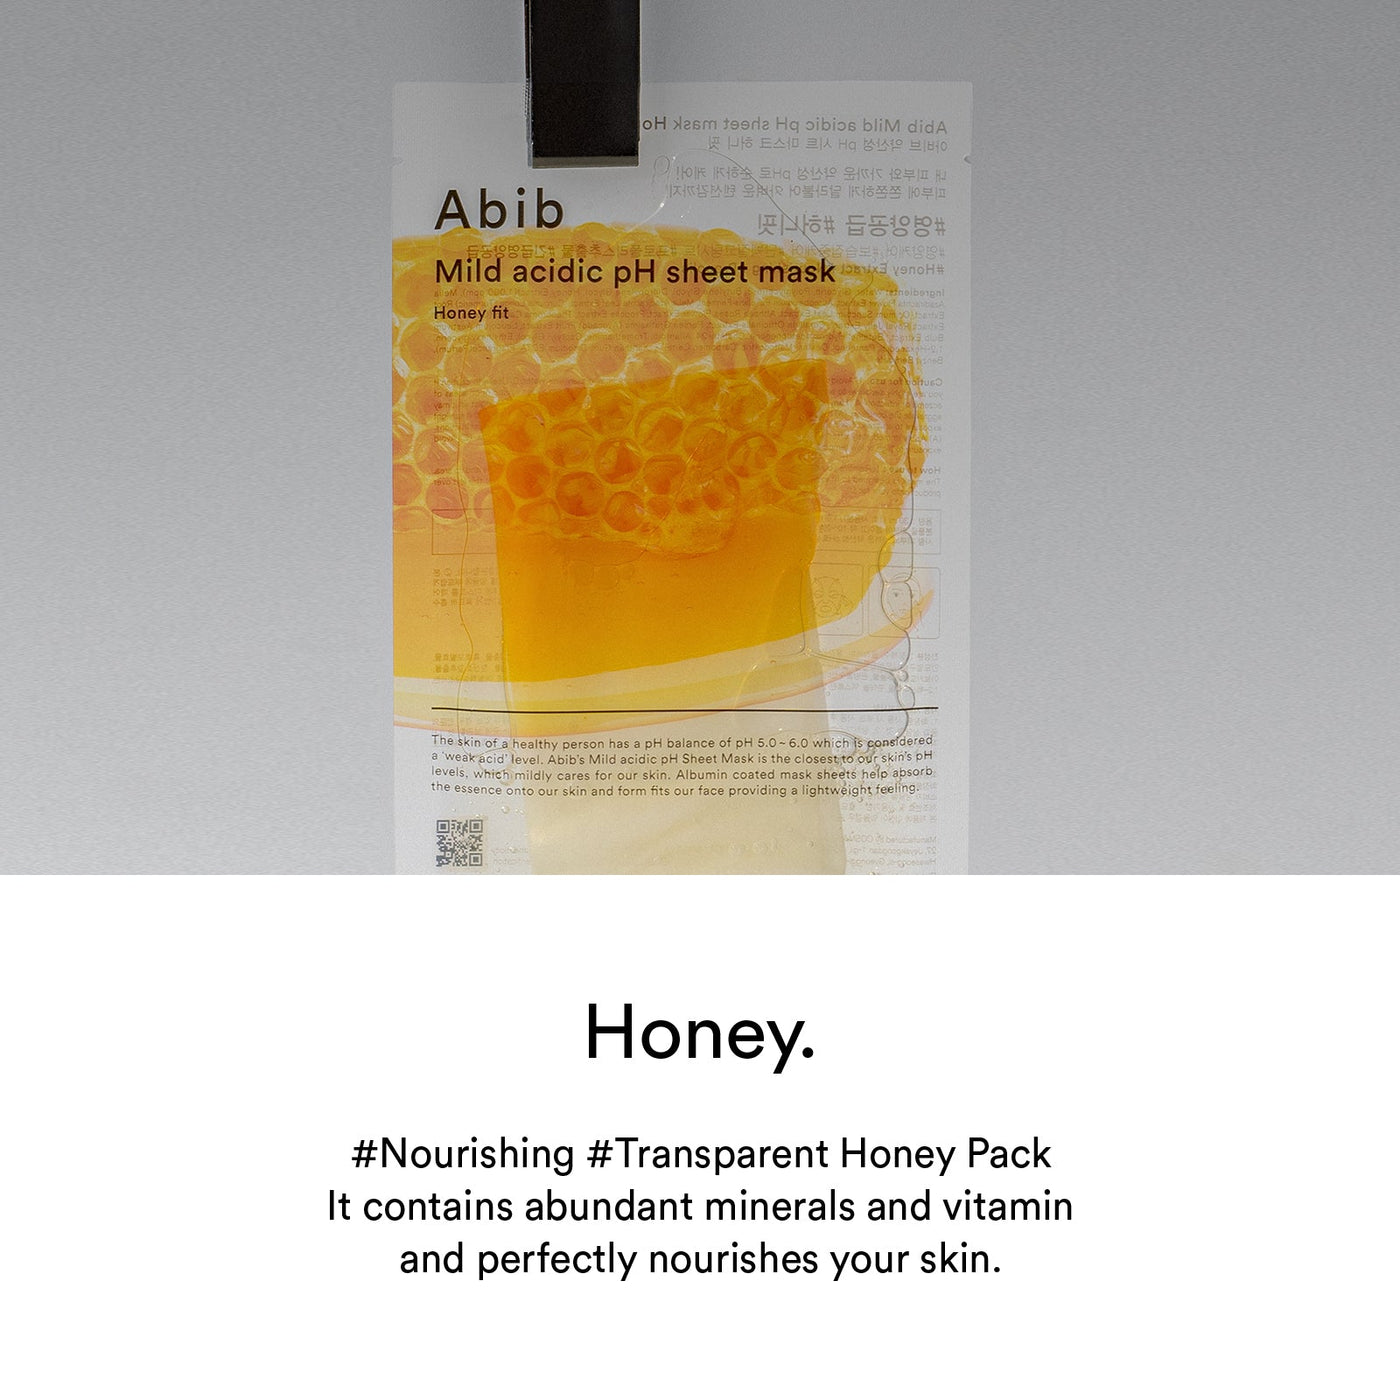 [Abib] Máscara Facial Nutritiva Mild Acidic pH Sheet Mask Honey Fit (5 unid.) 🇰🇷